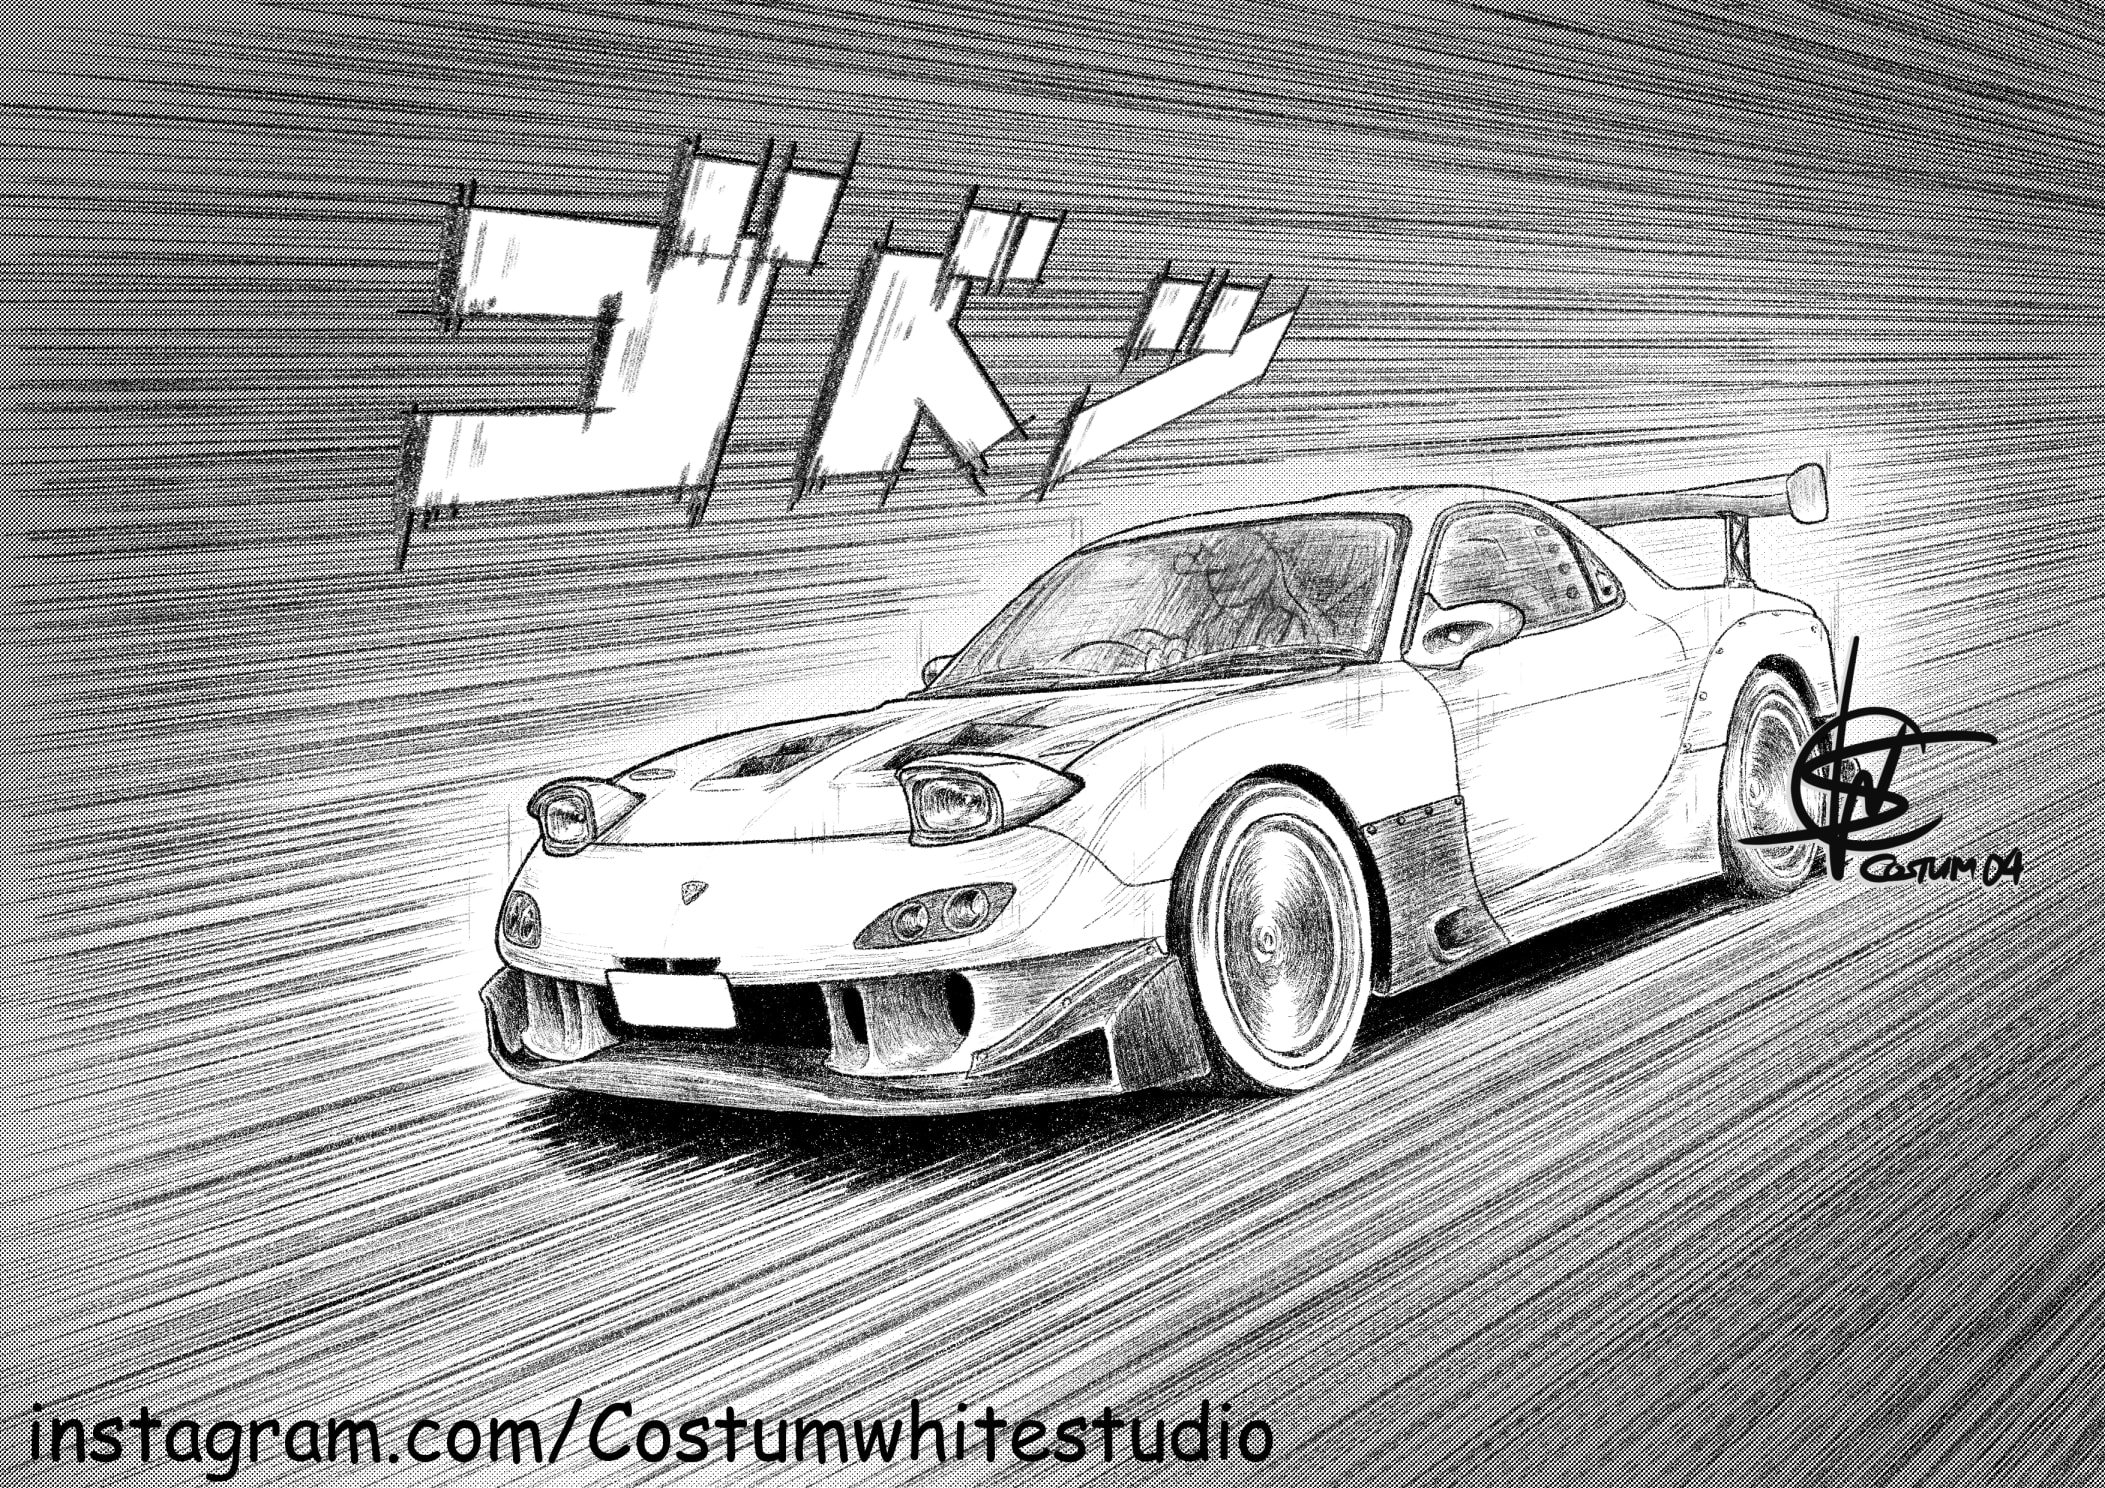 Anime manga line art by by Shuichi Shigeno of Initial D artwork